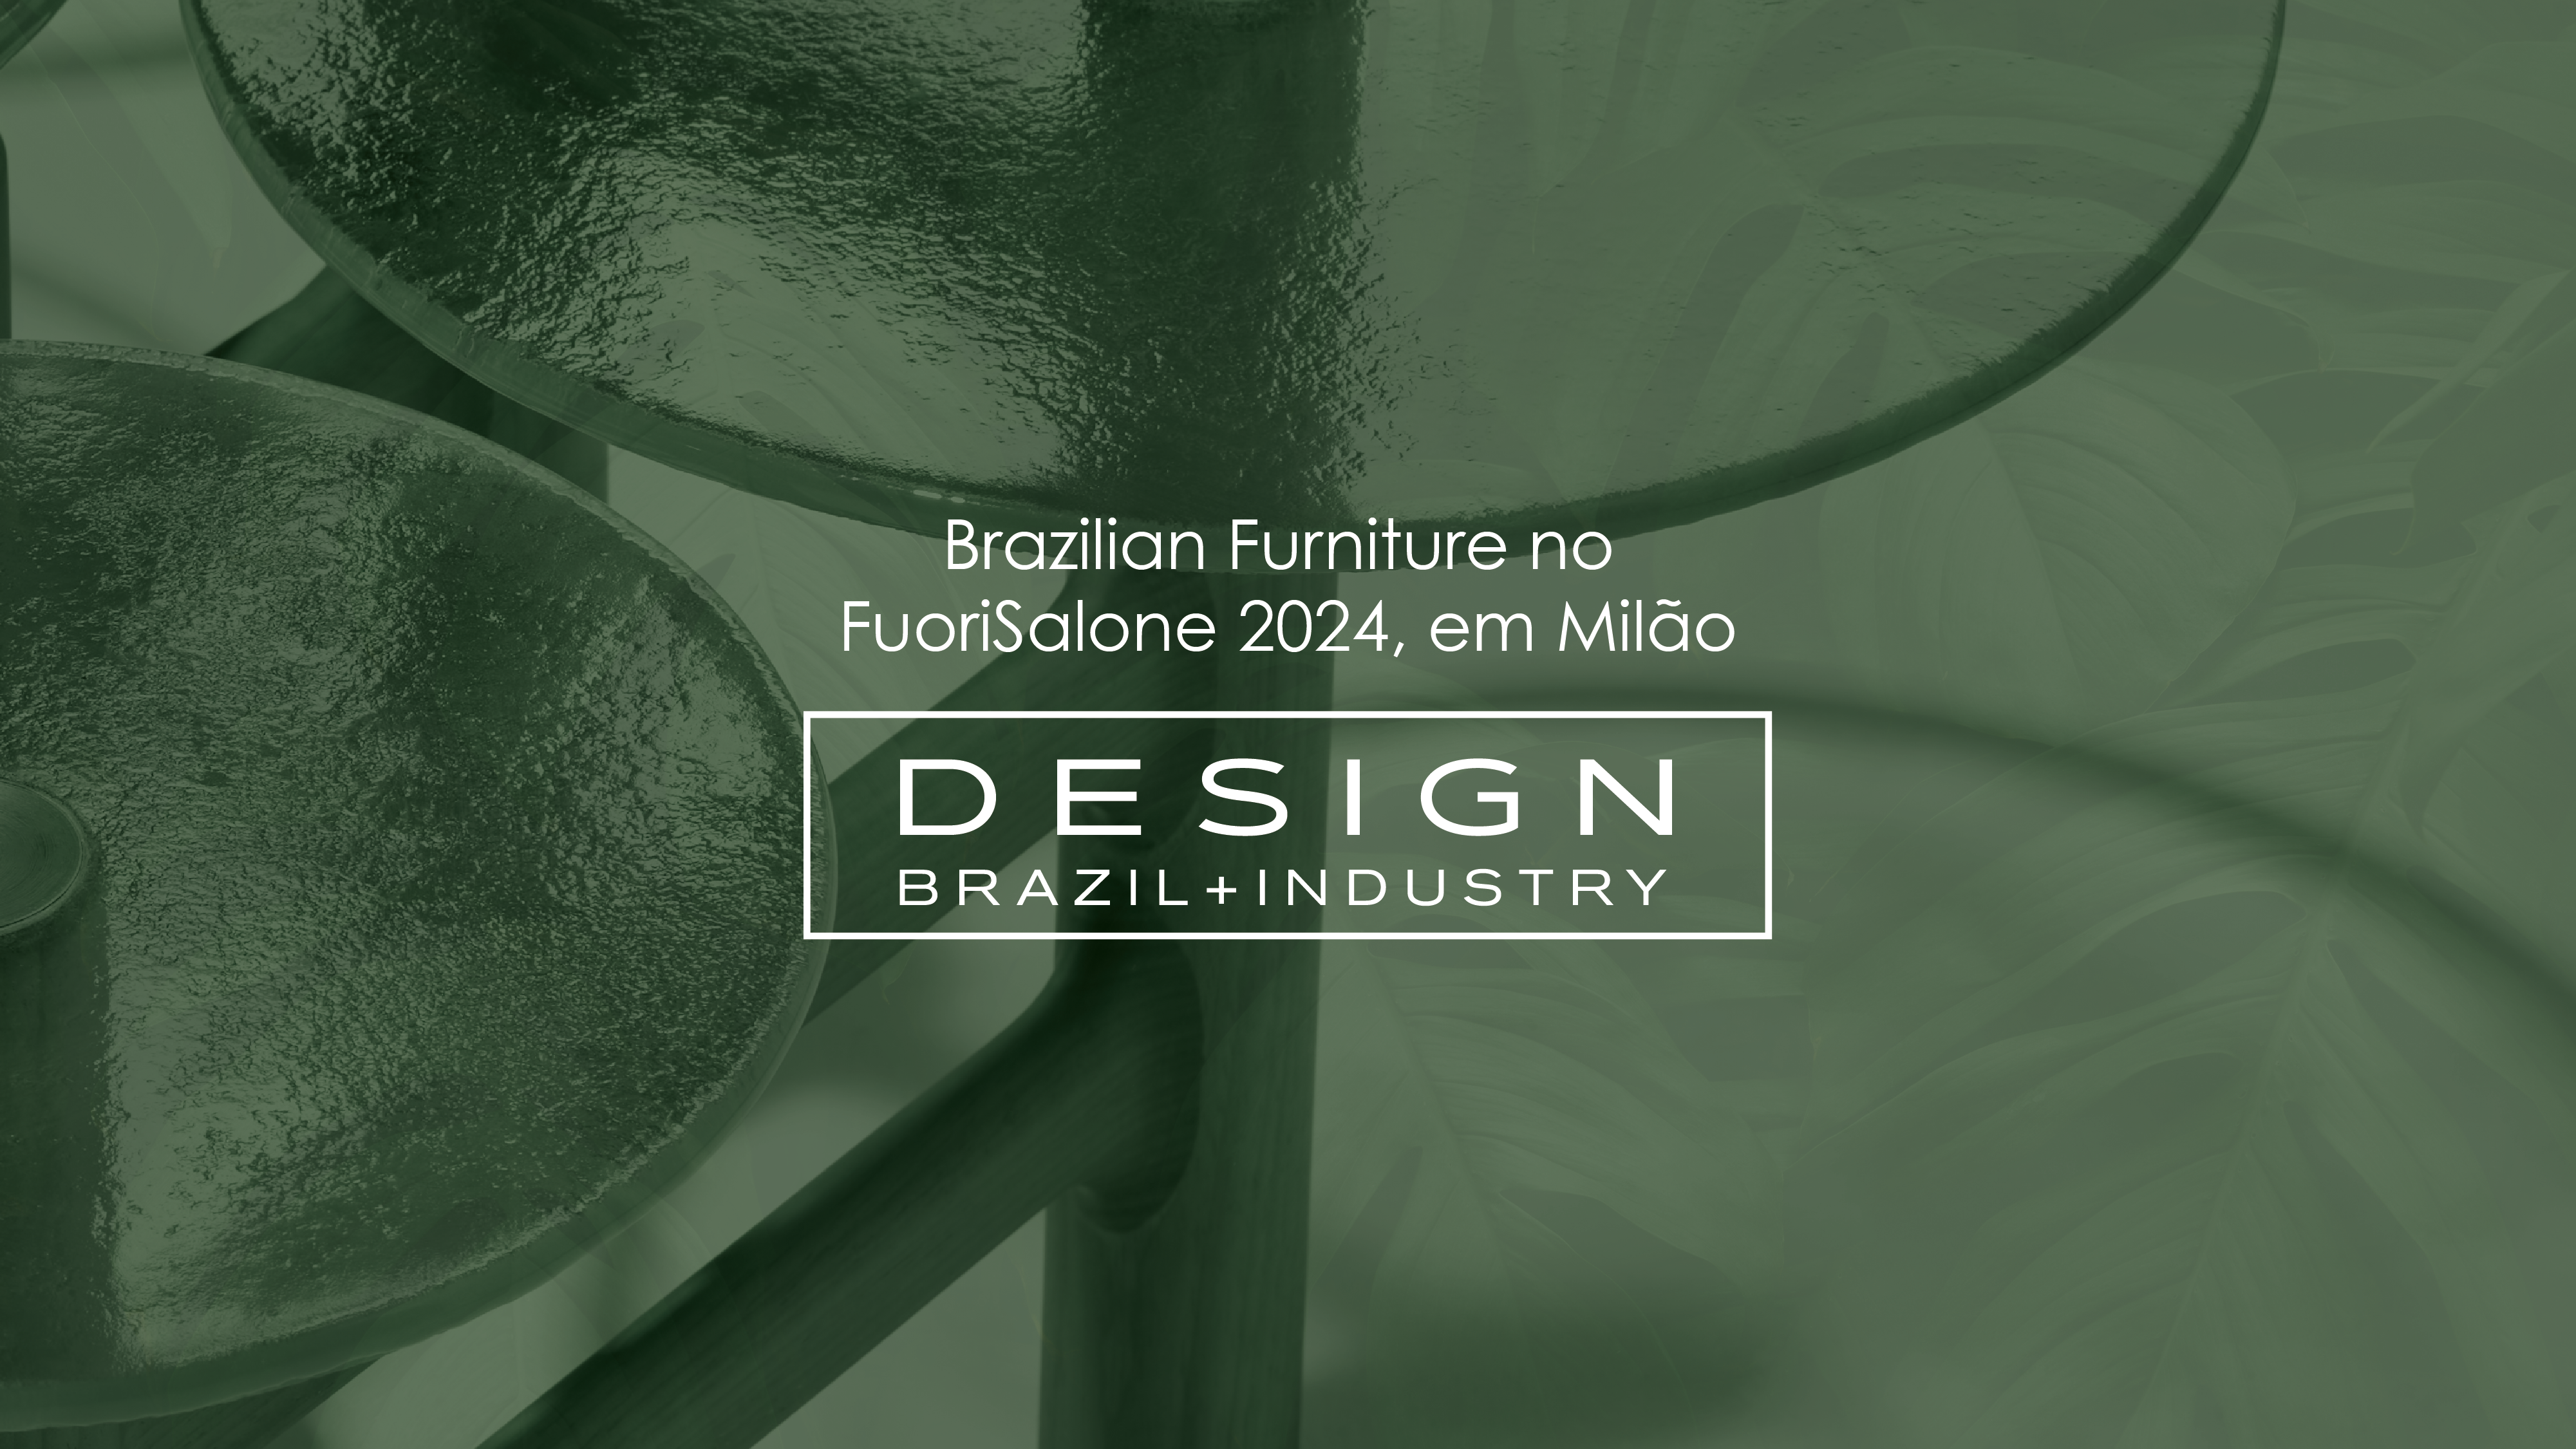 Brazilian Furniture no FuoriSalone 2024, em Milão